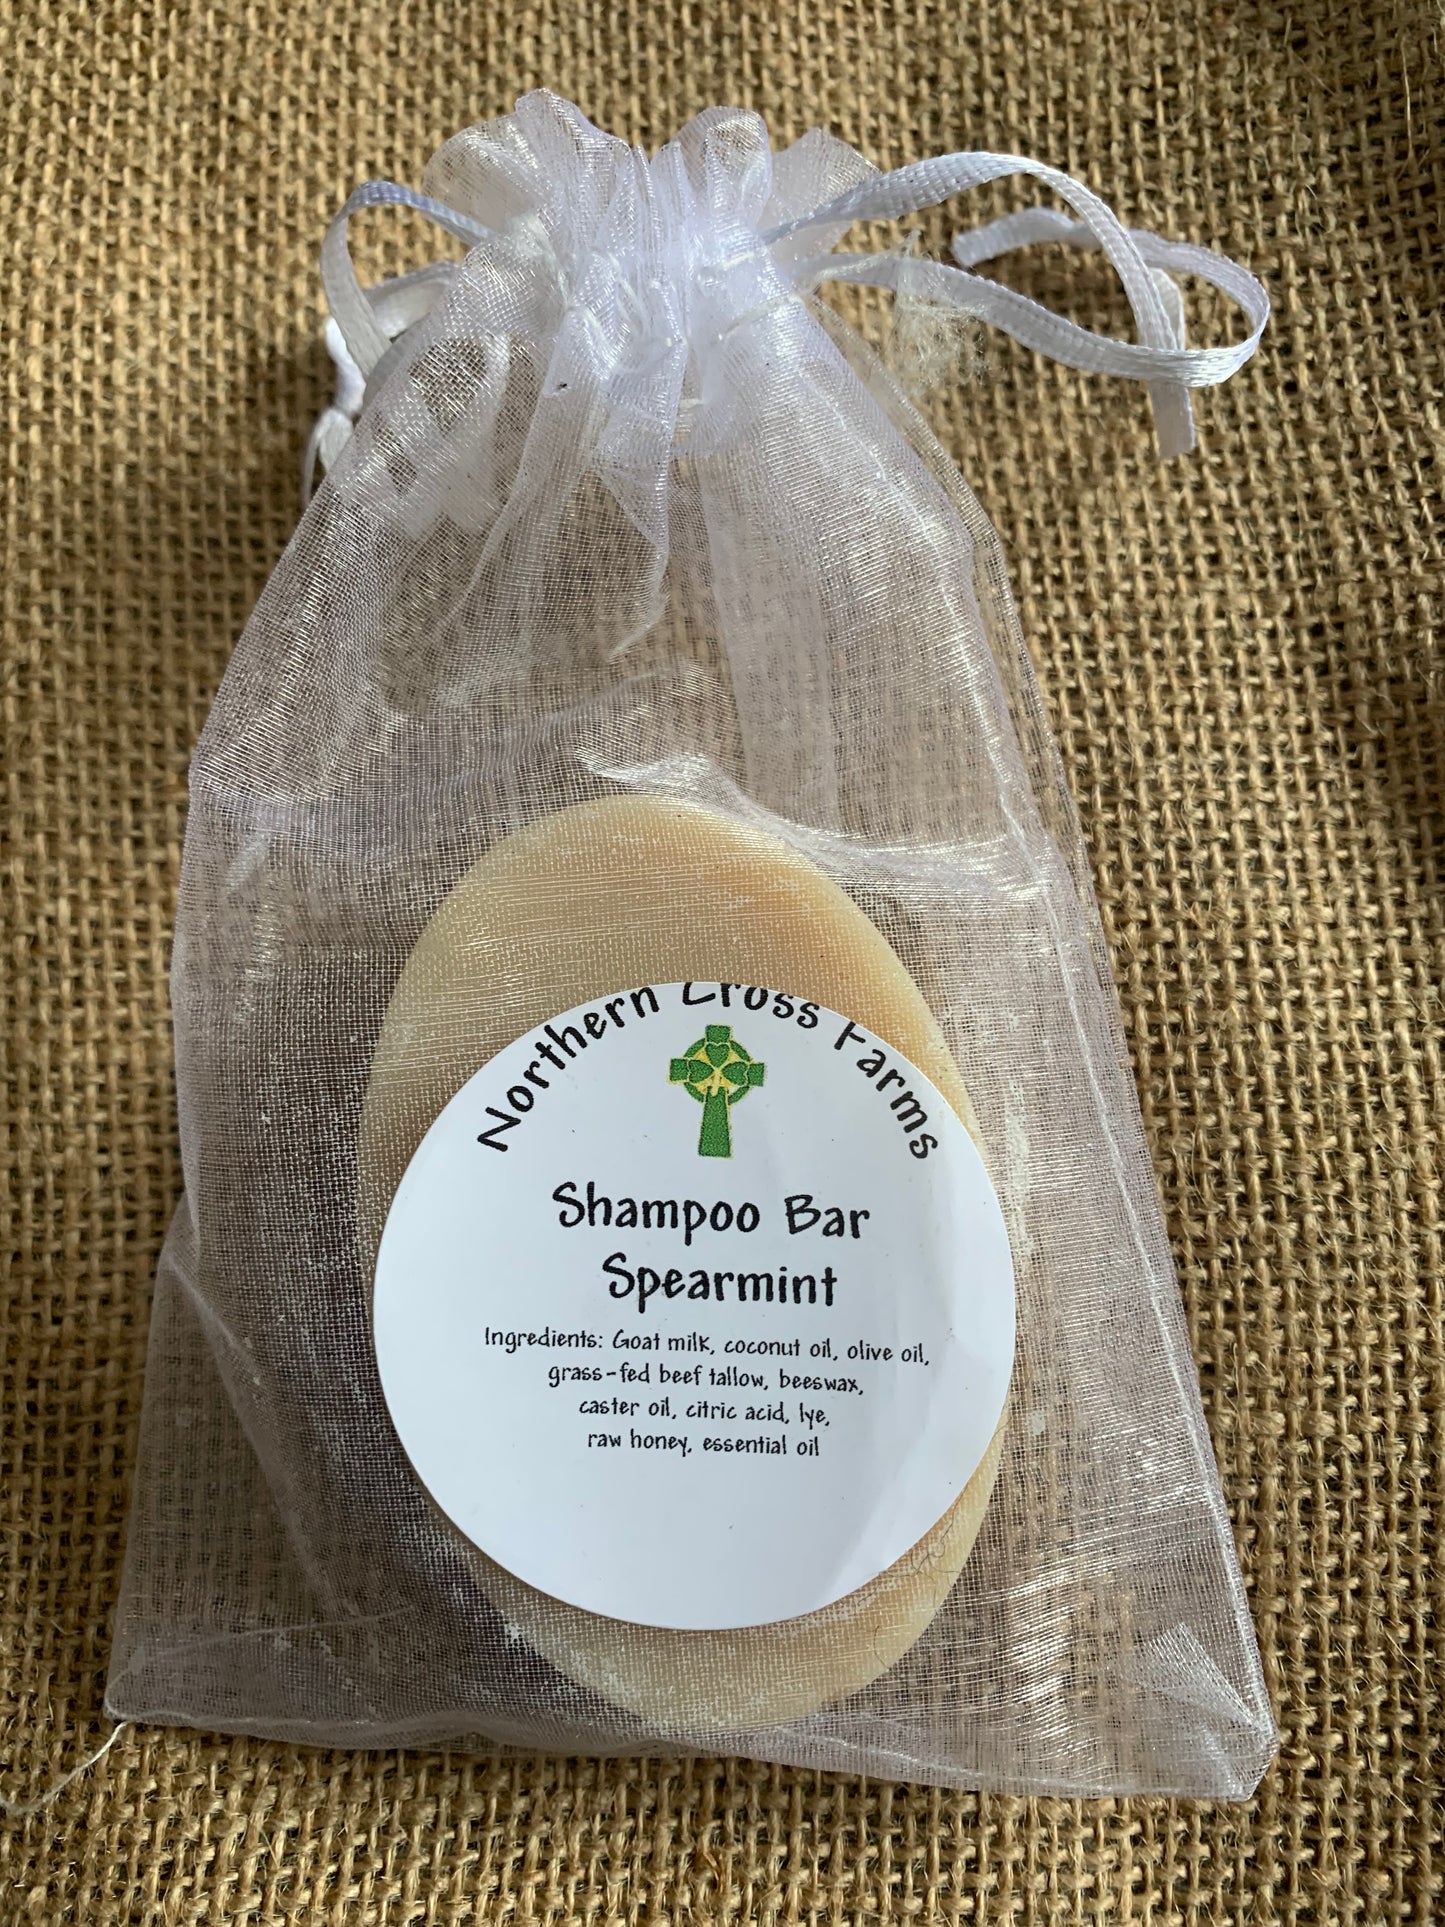 Spearmint Shampoo Bar is